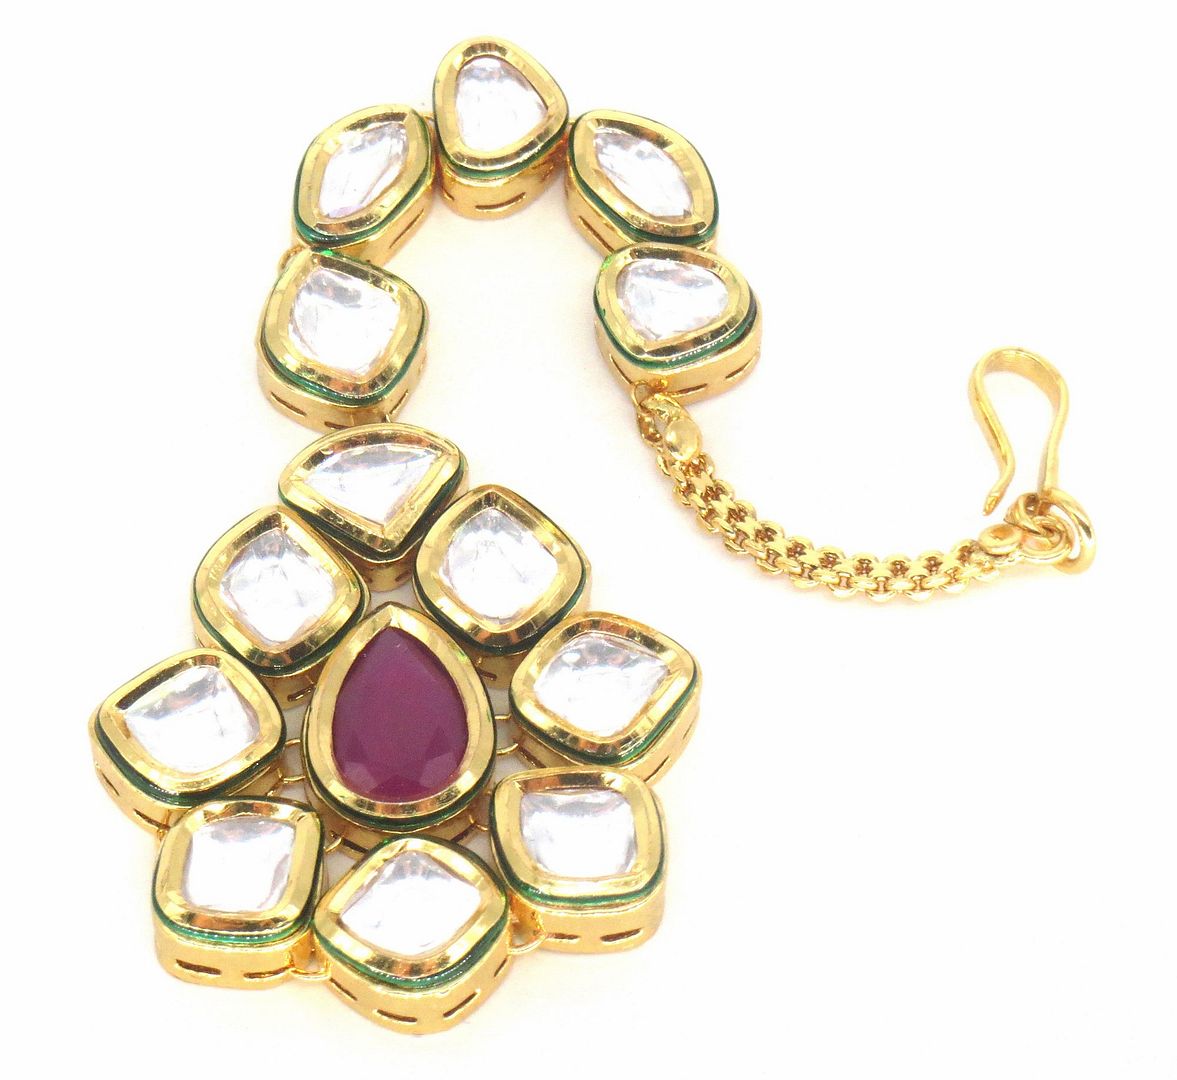 Jewelshingar Jewellery Gold Plated Kundan Maangtikka For Women ( 58028MTK )